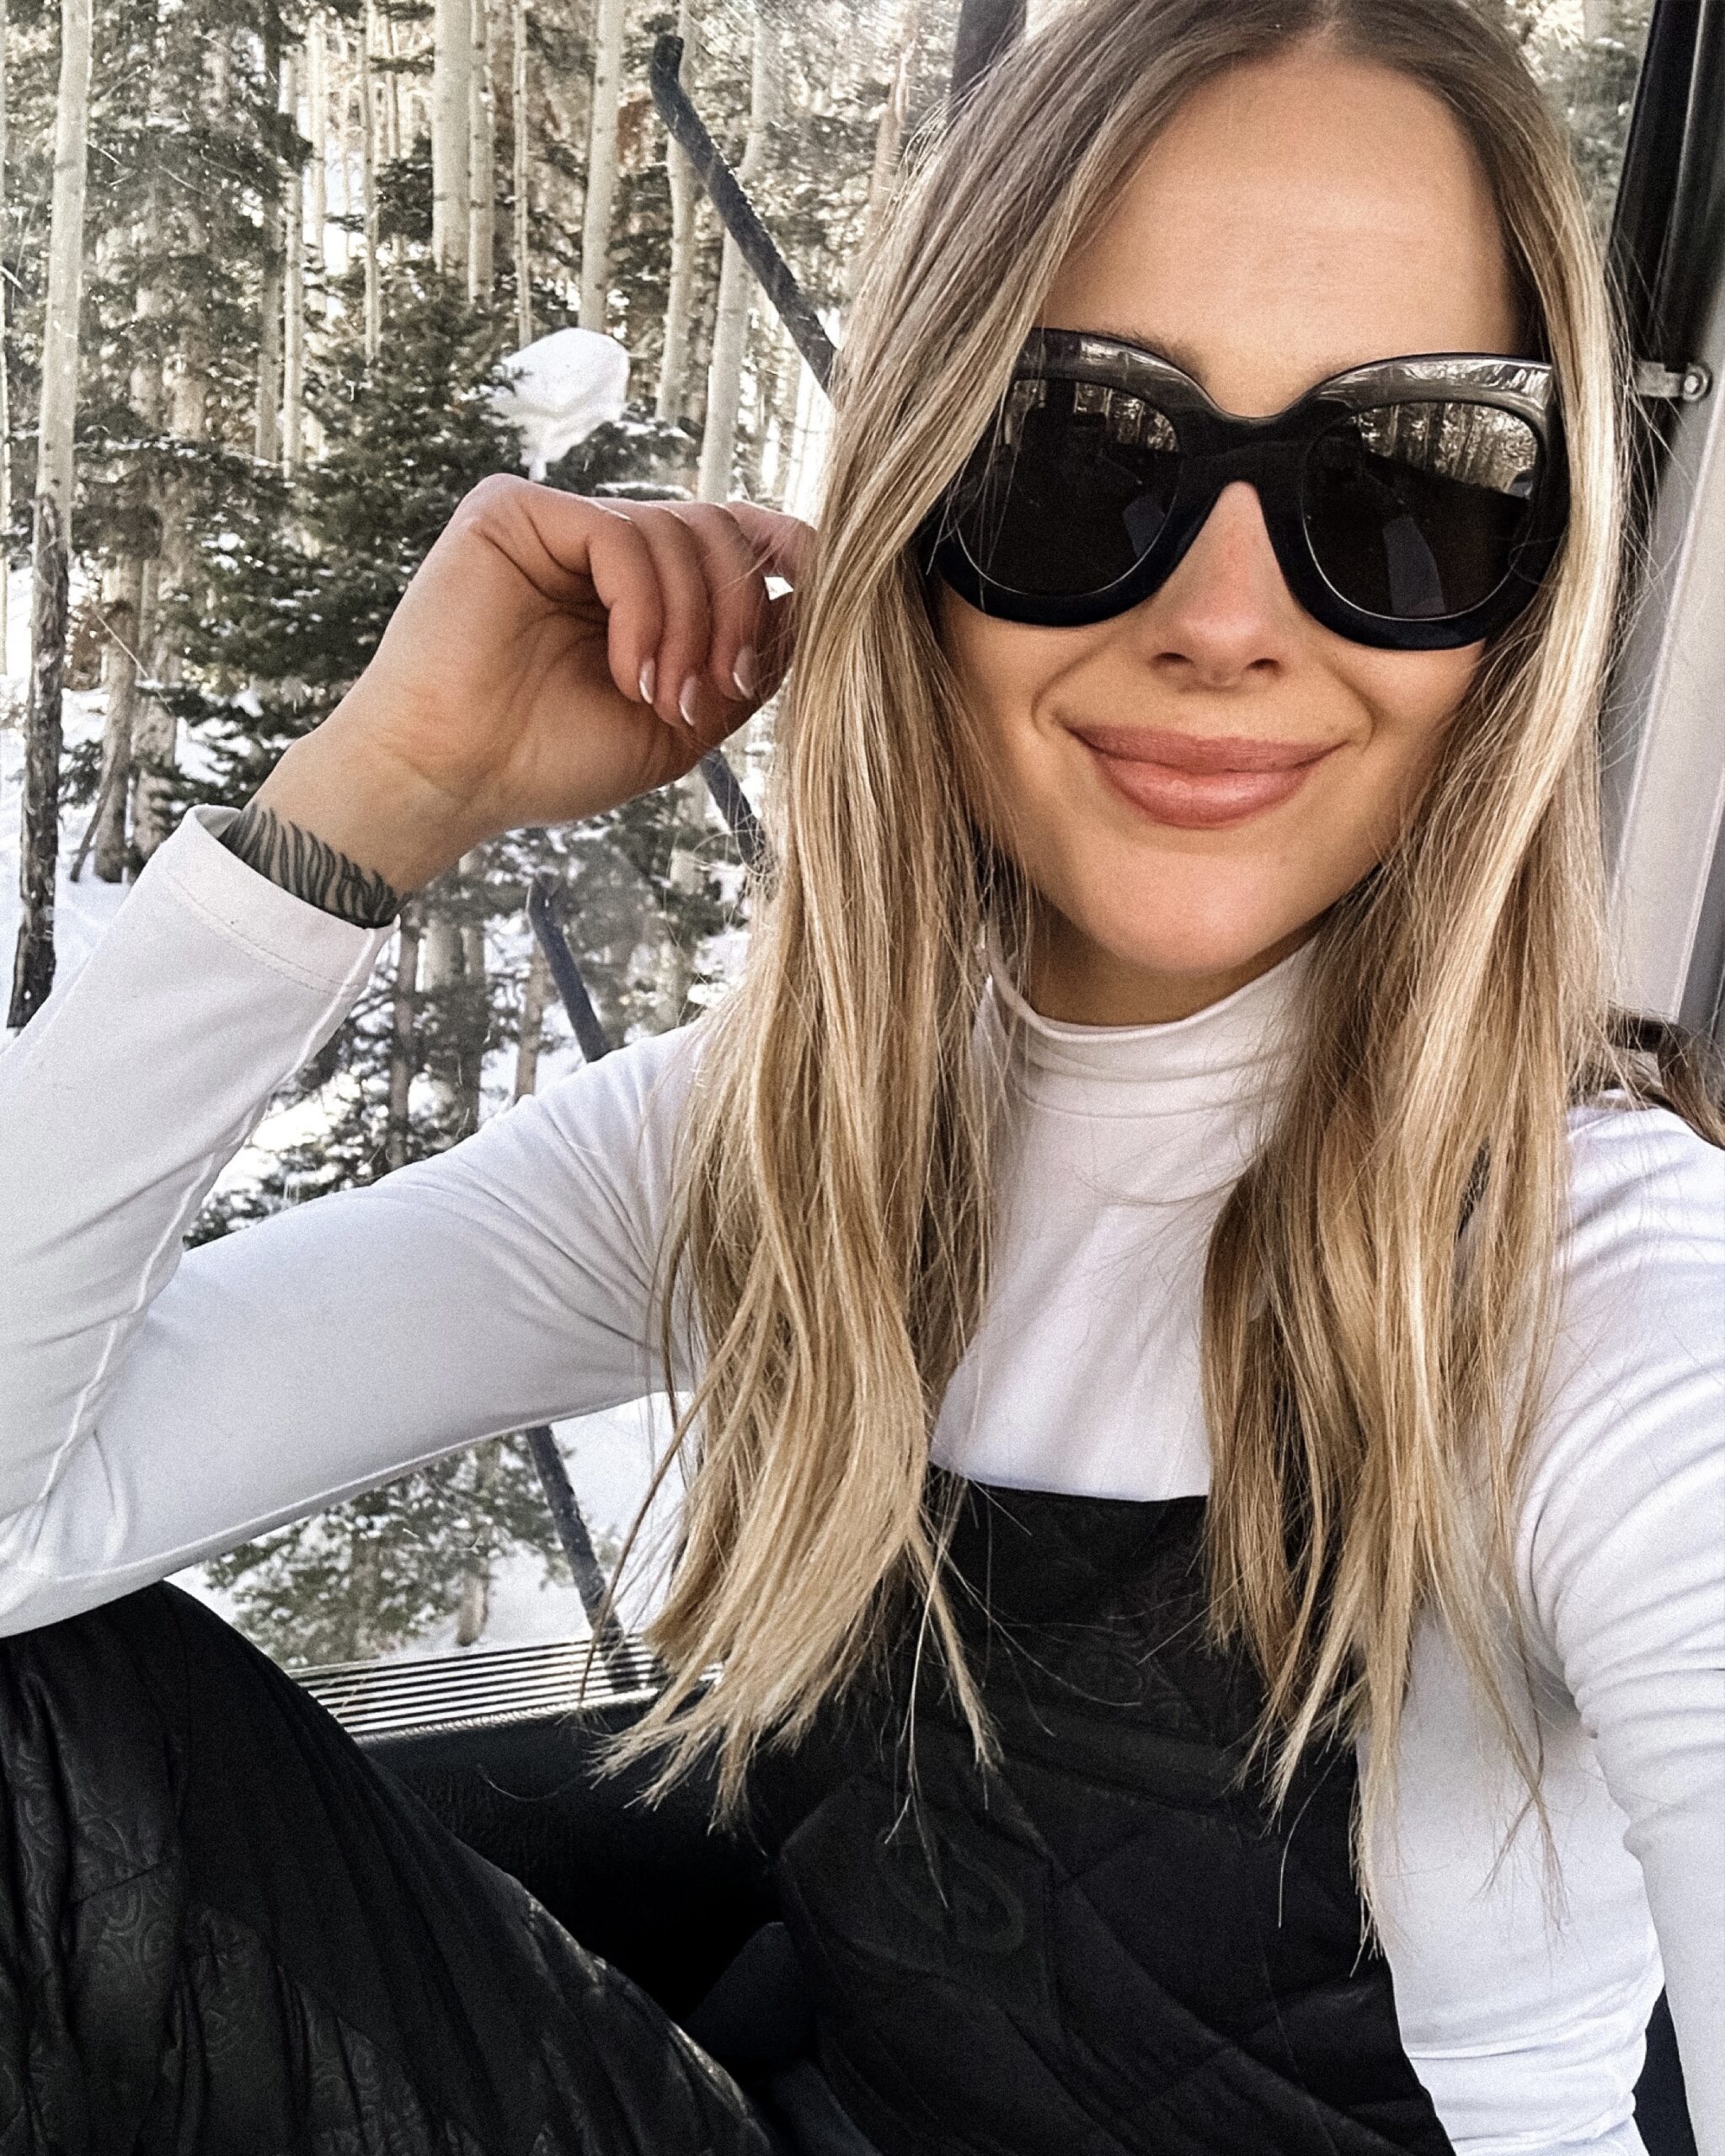 Fashion Jackson Wearing Winter Ski Outfit White Turtleneck Black Ski Bibs